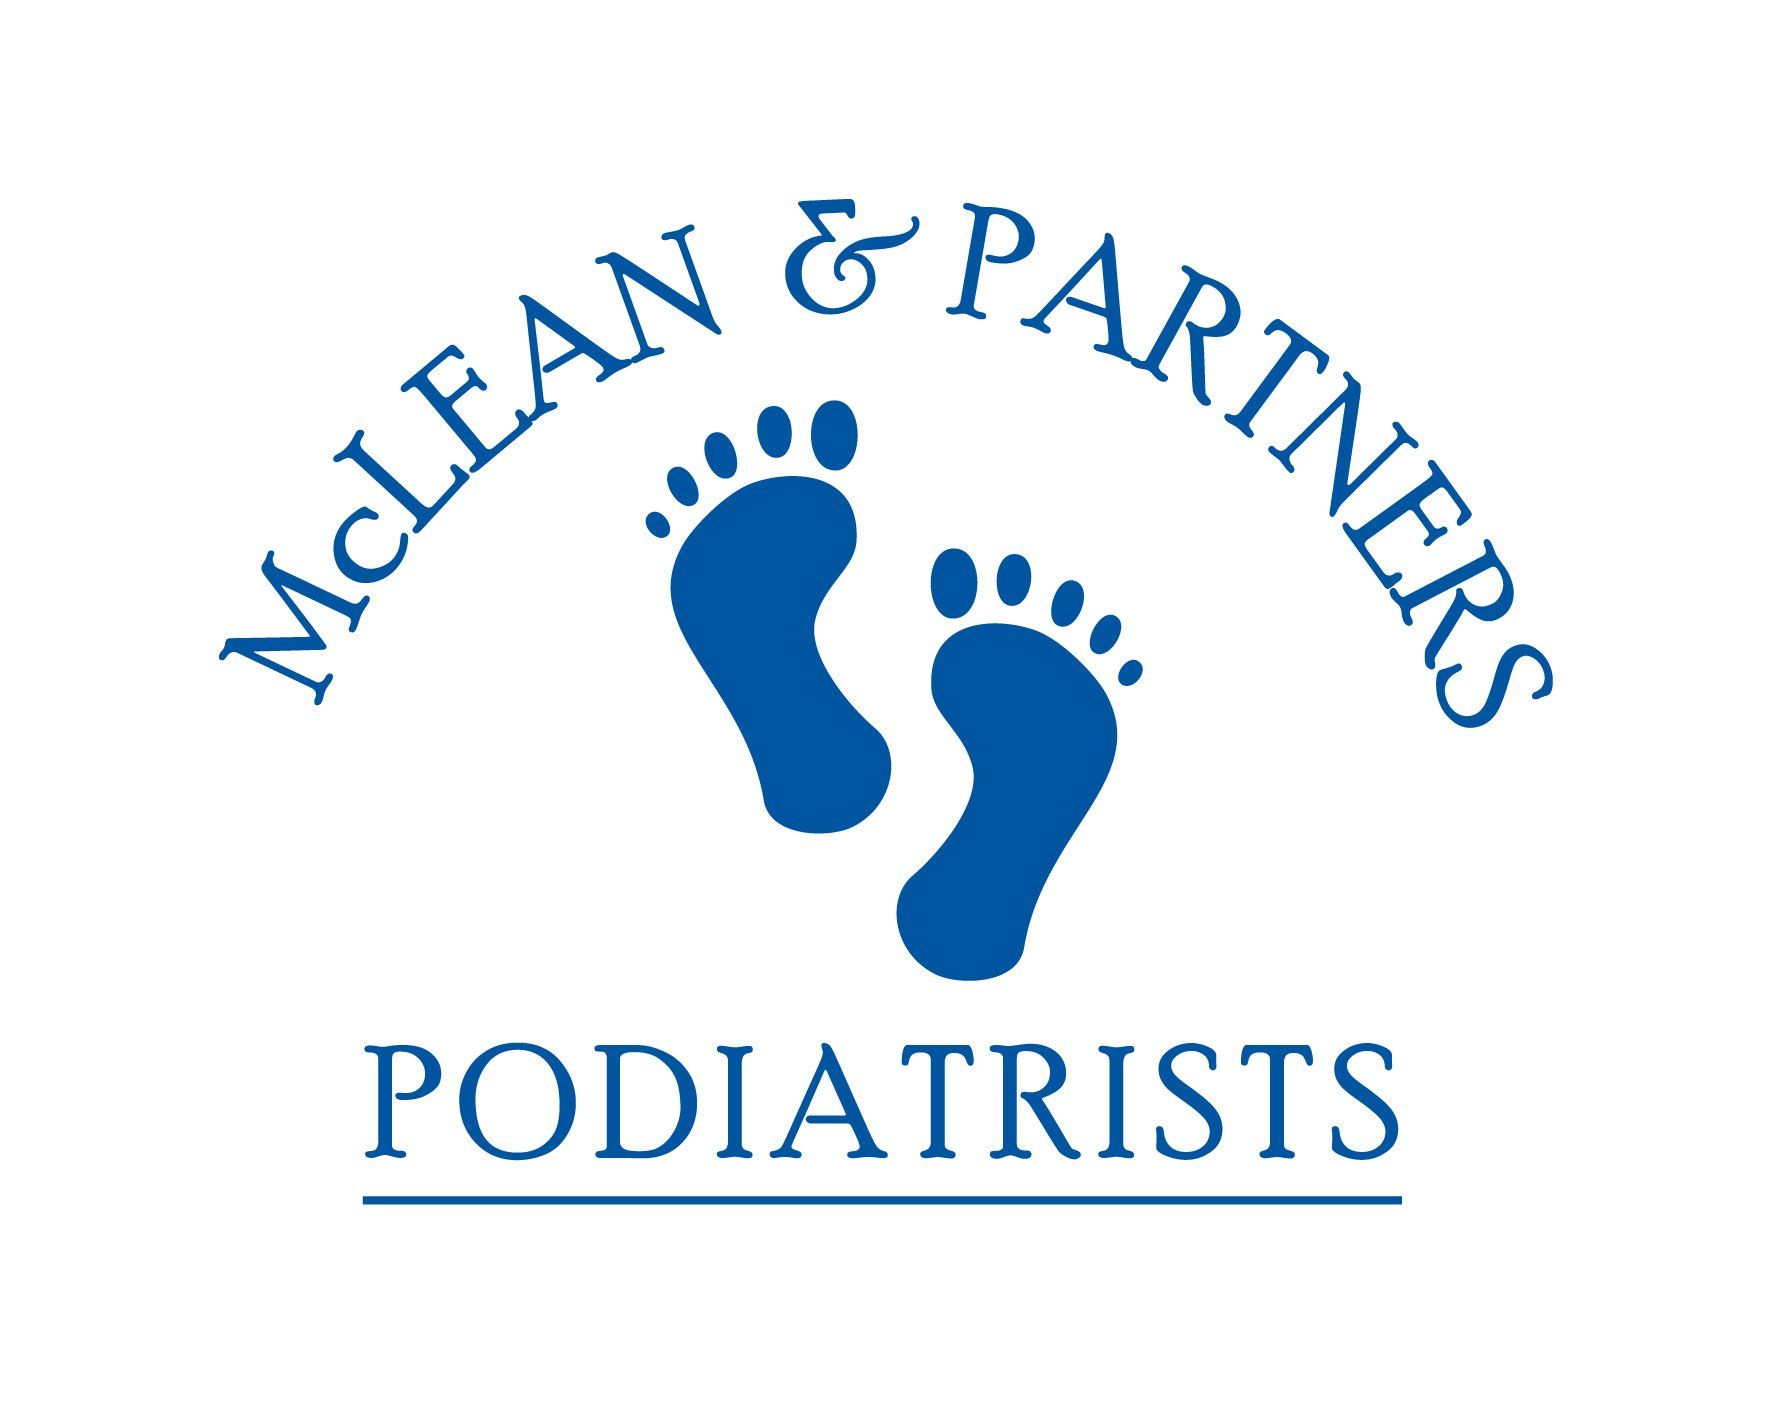 McLean & Partners Podiatrists